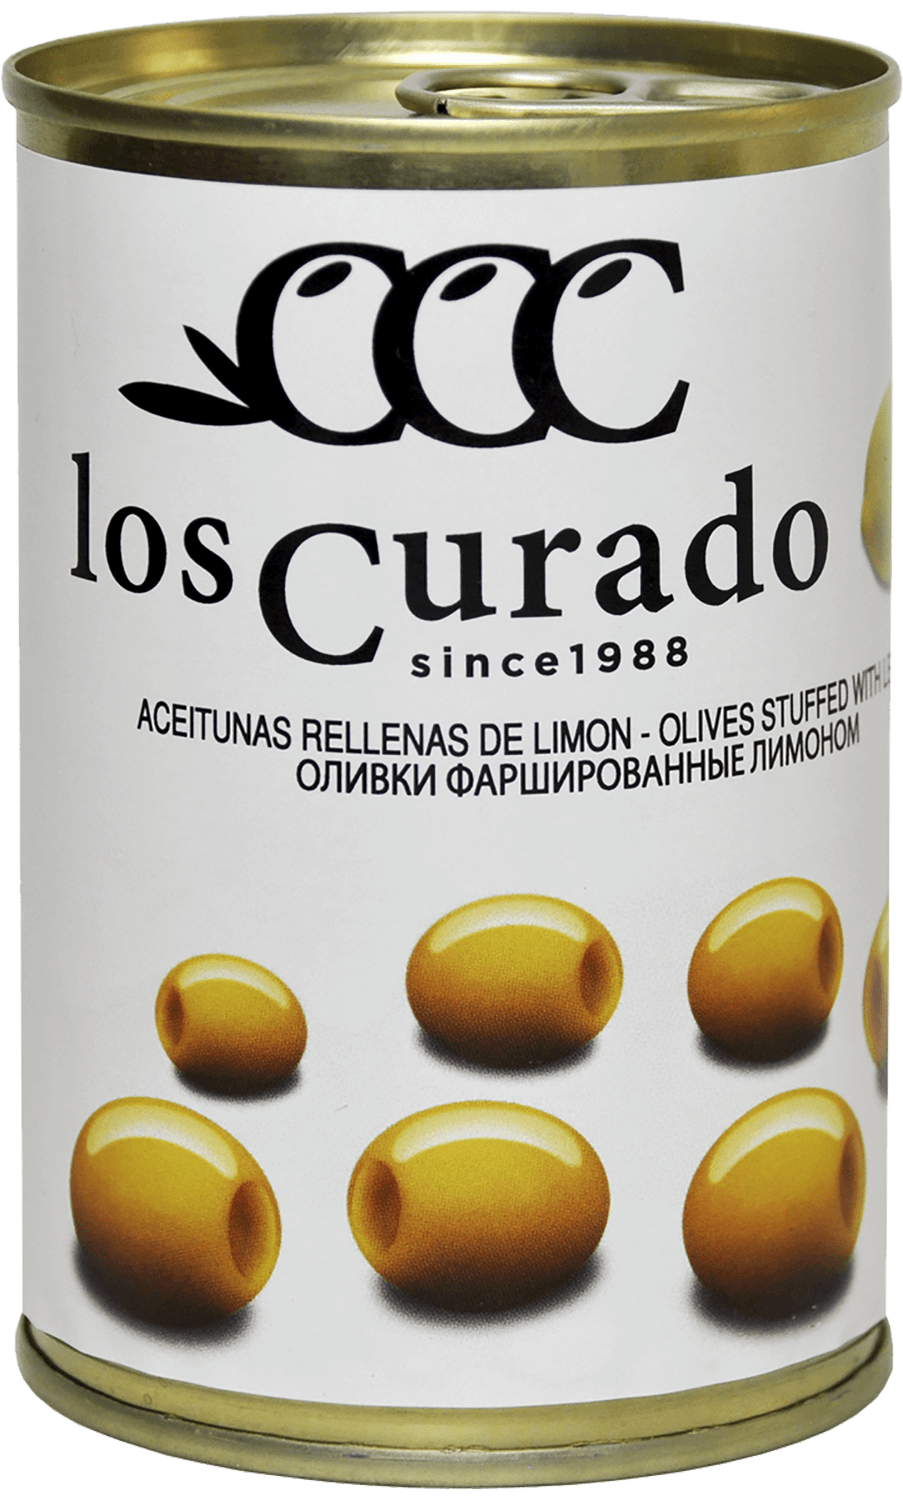 Olives stuffed with lemon Los Curado